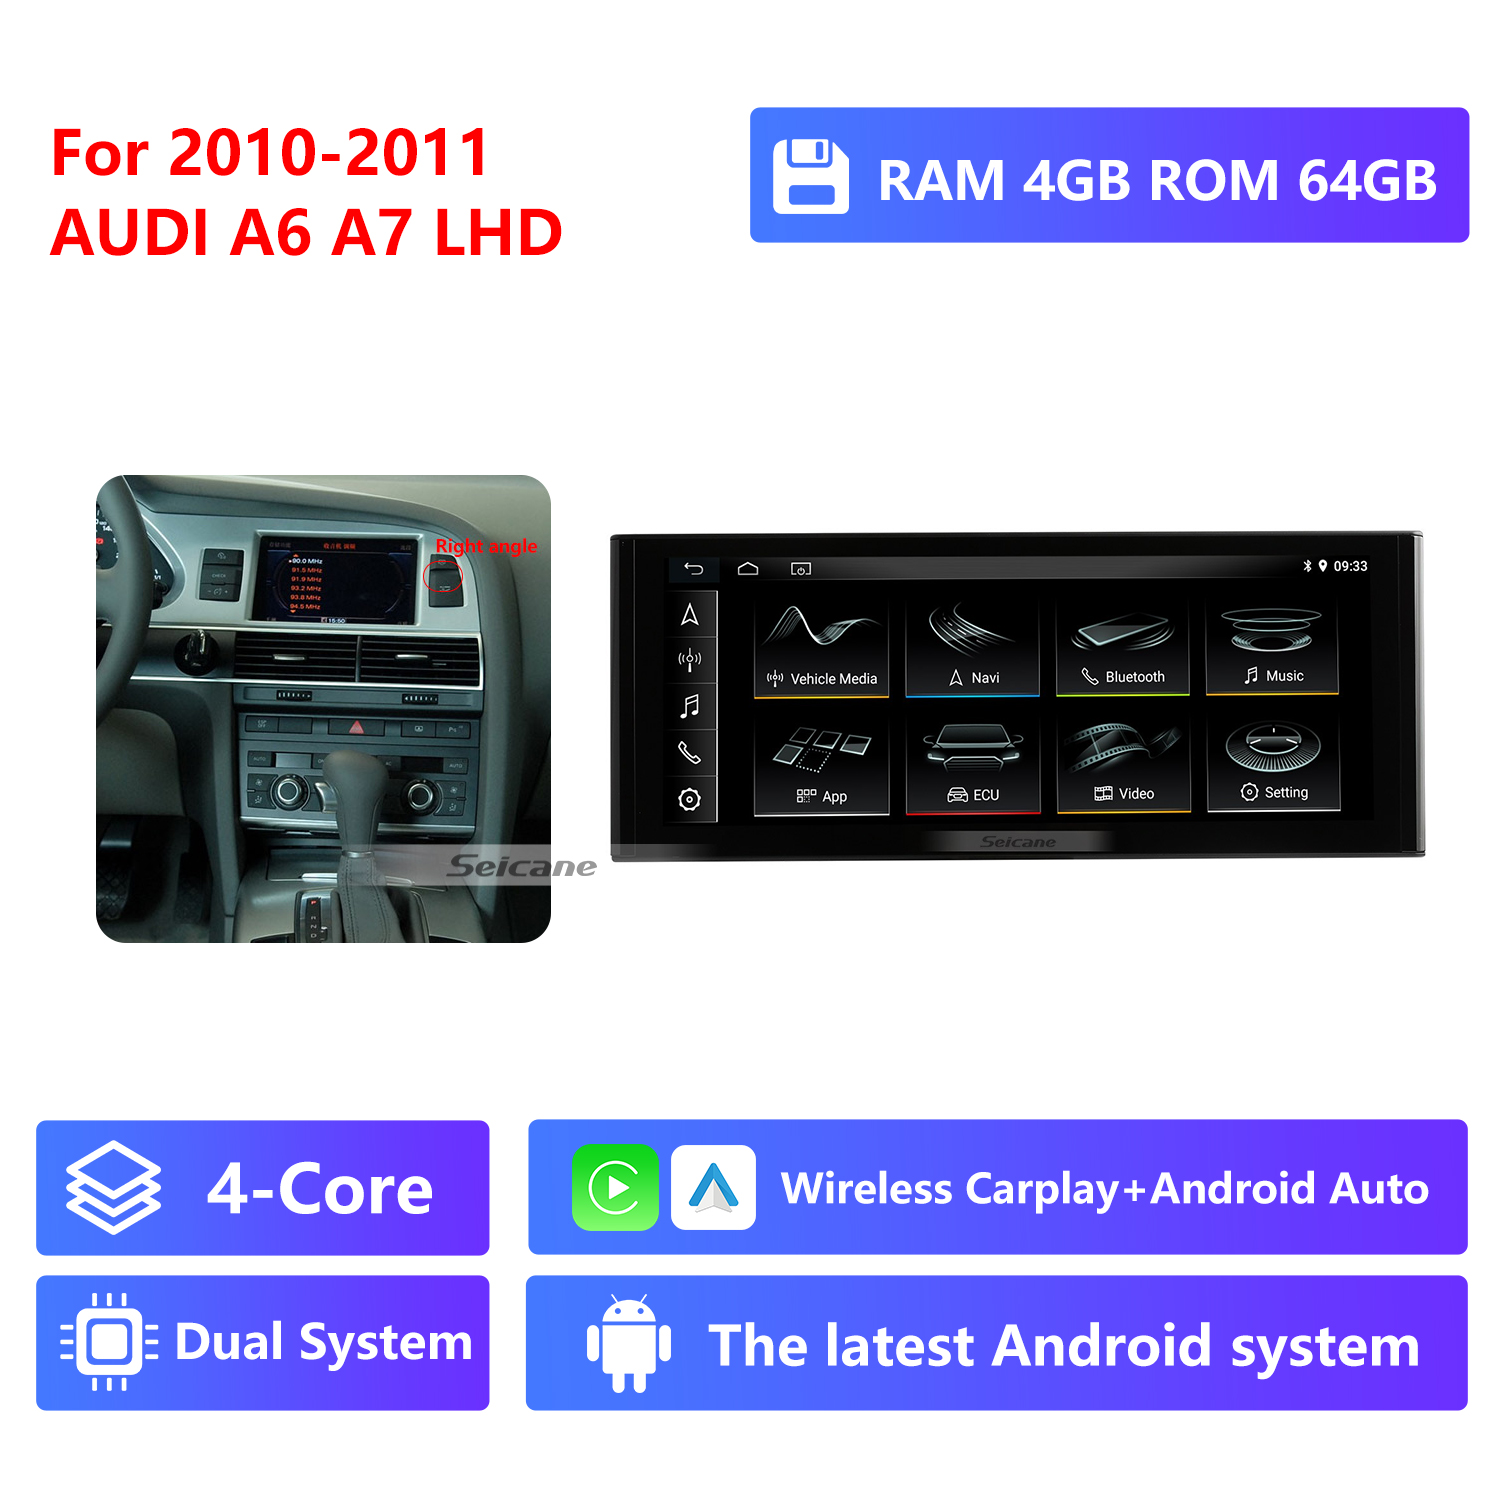 4-Core RAM 4G ROM 64G,2010-2011,LHD